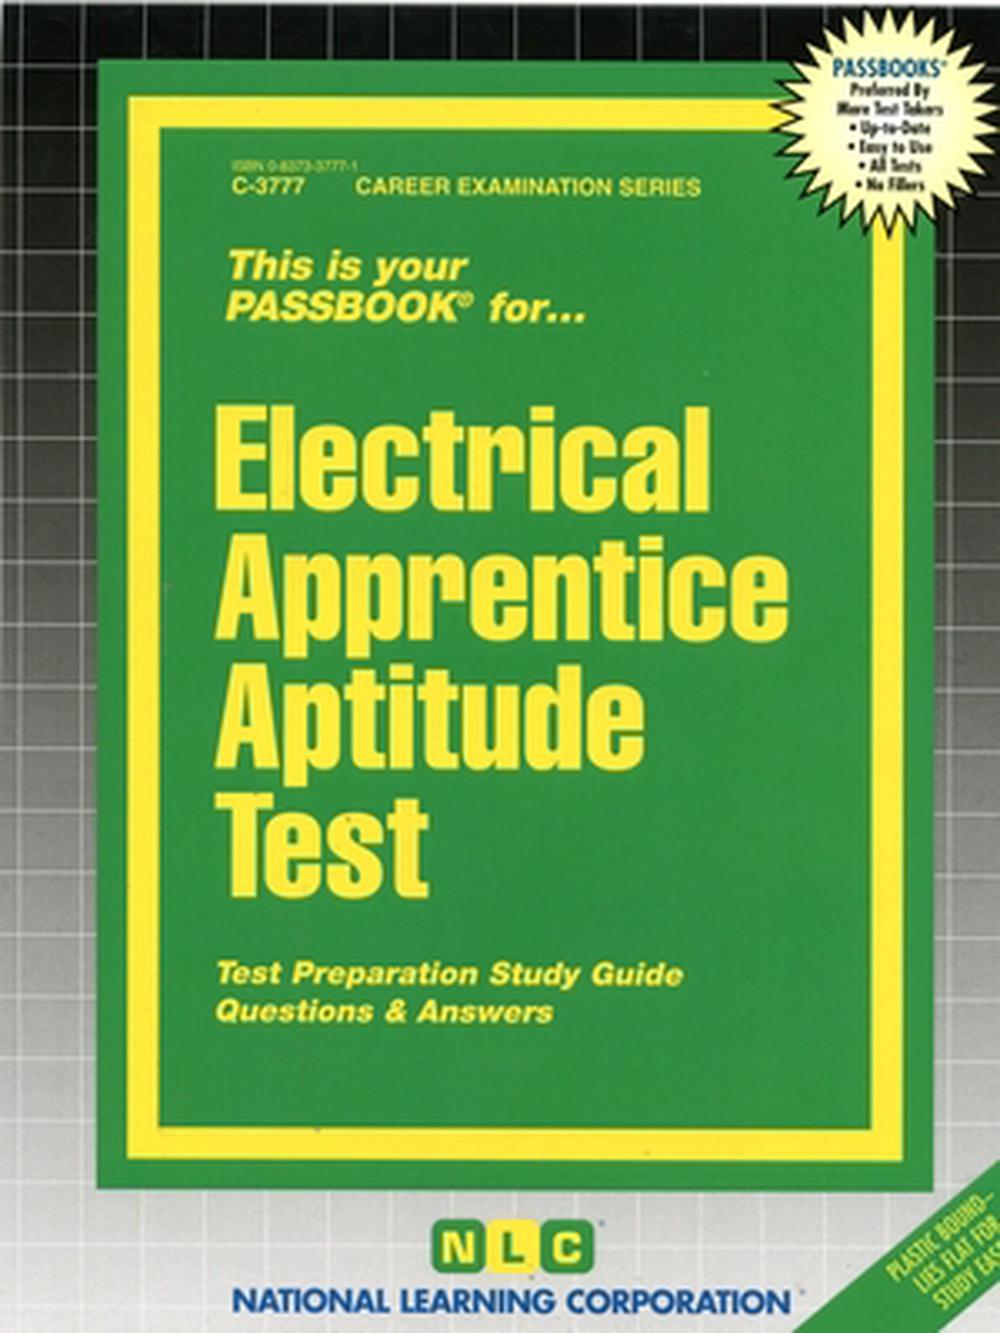 electrical-apprentice-aptitude-test-by-jack-rudman-english-paperback-book-free-9780837337777